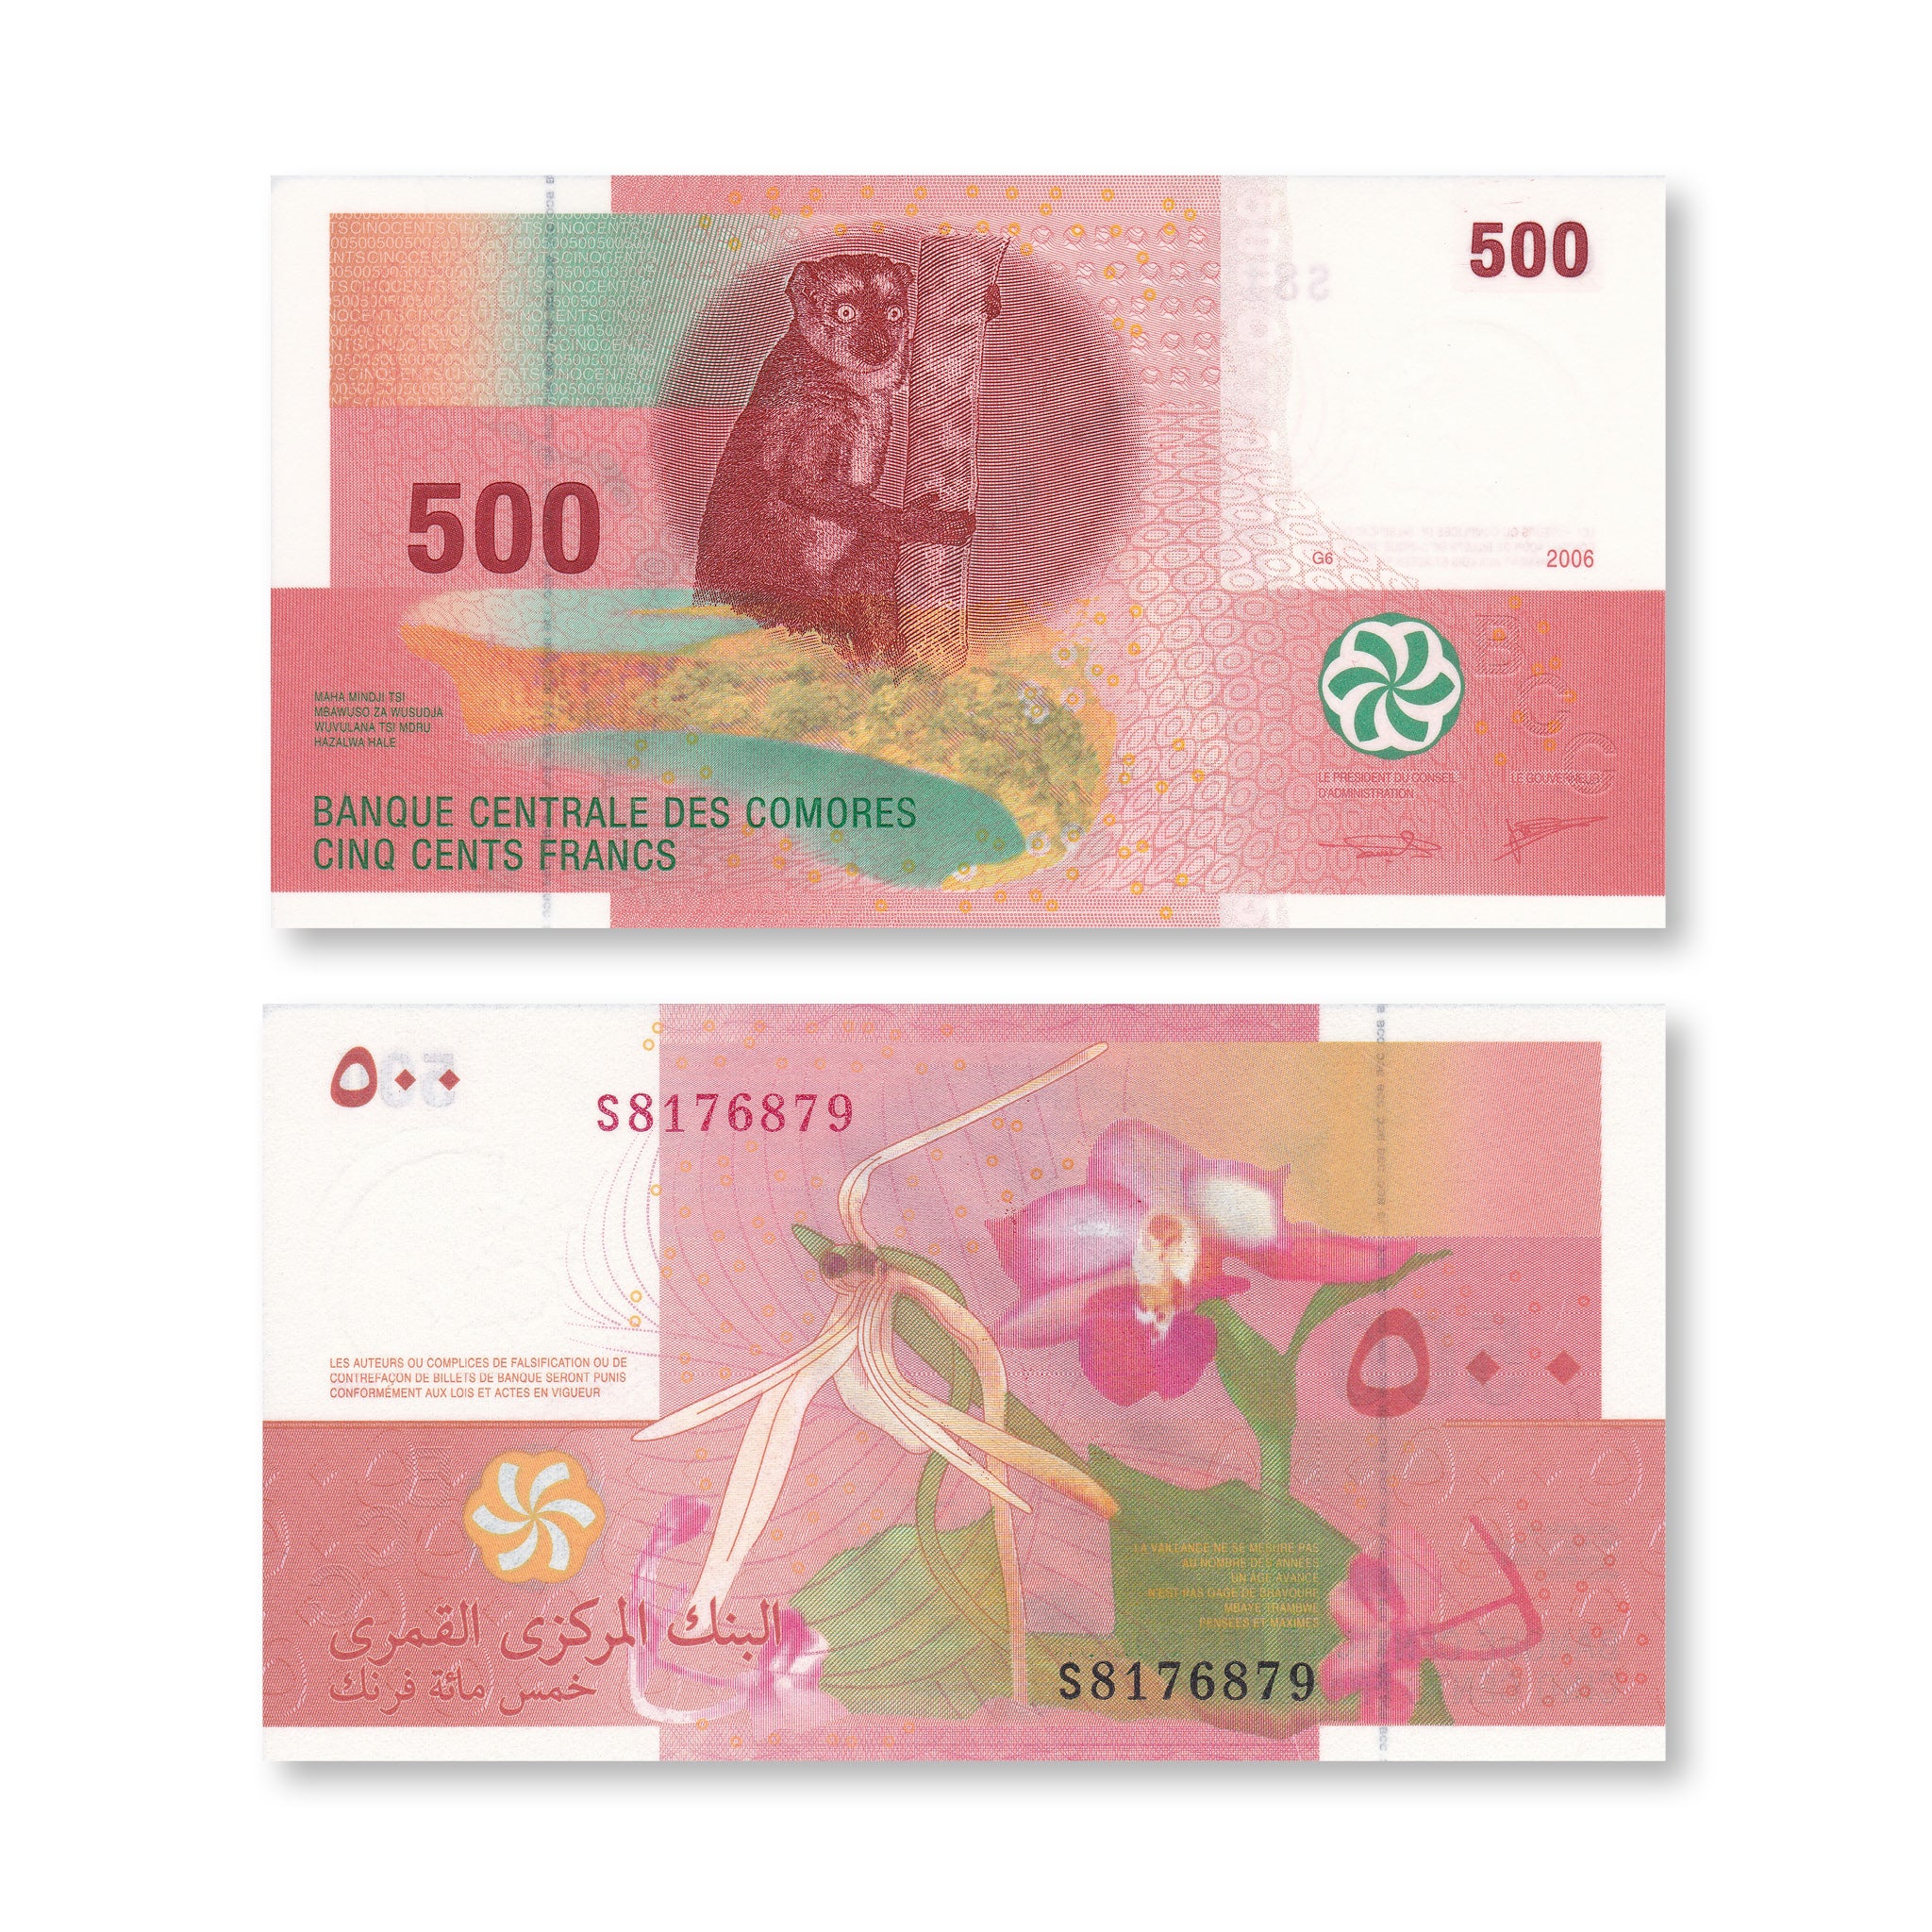 Comoros 500 Francs, 2006 (2020), B306c, P15a, UNC - Robert's World Money - World Banknotes